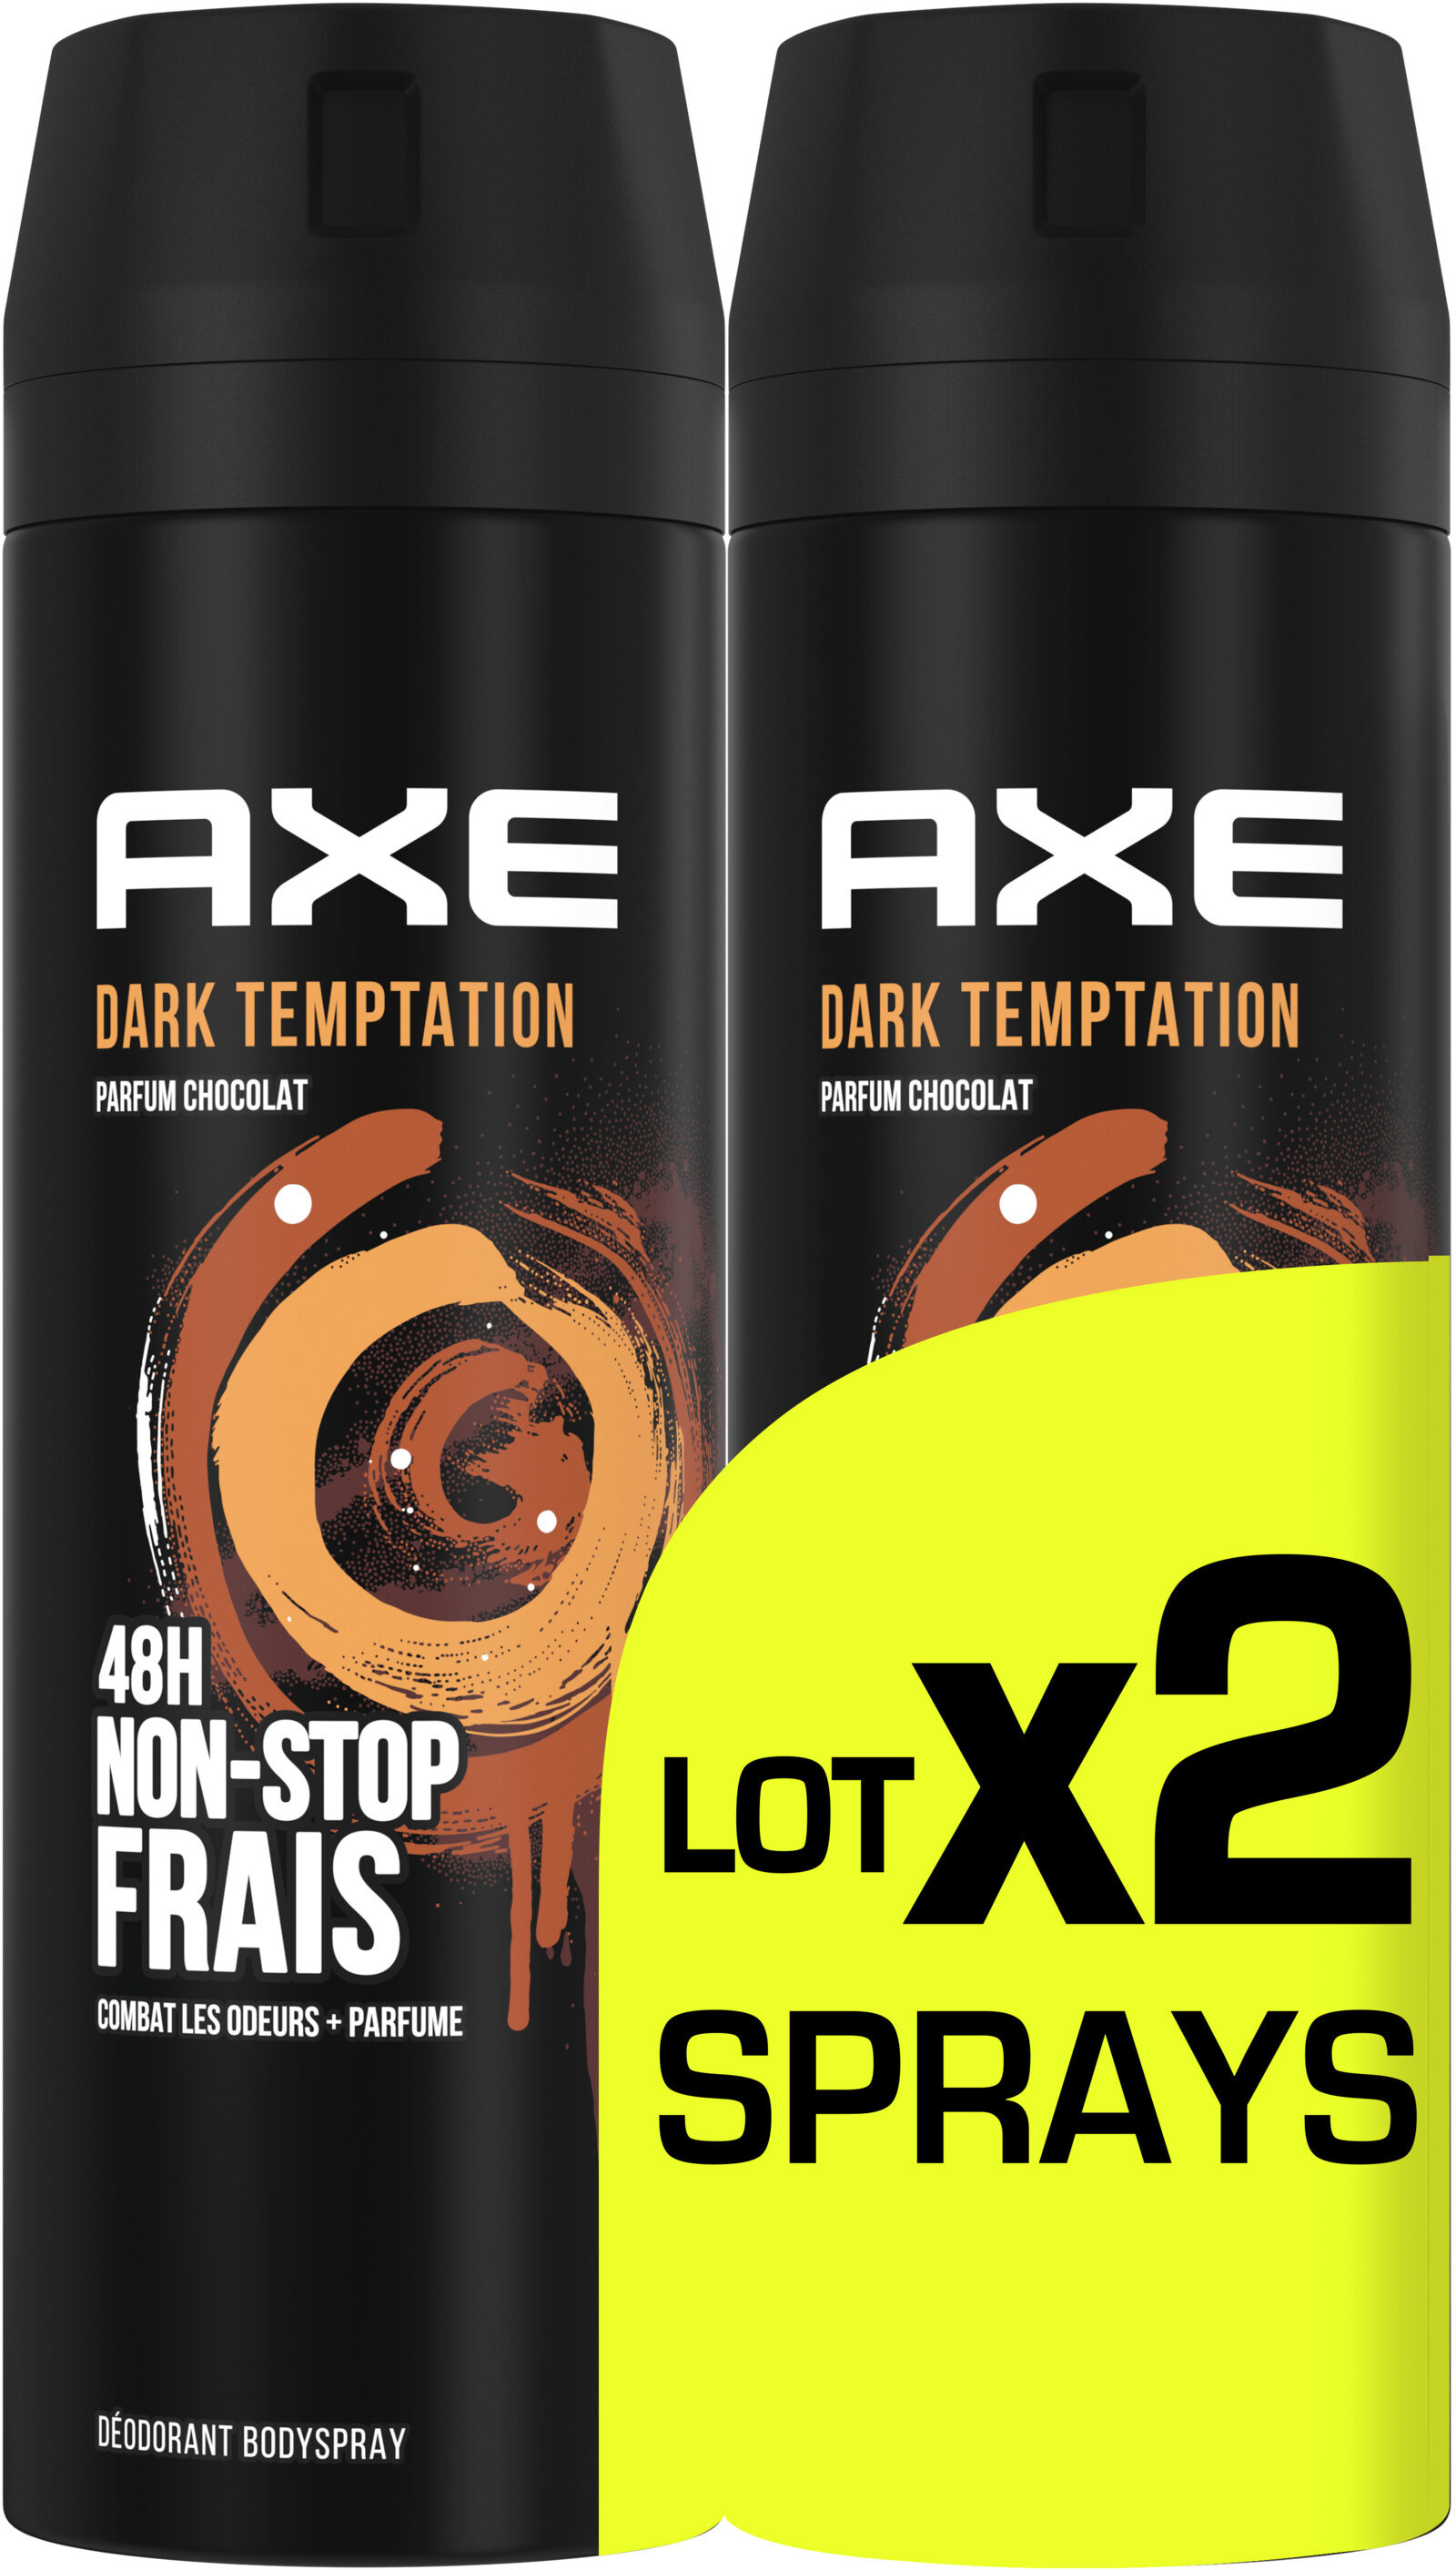 AXE Déodorant Bodyspray Homme Dark Temptation 48h Non-Stop Frais Lot 2x200ml - Produit - fr